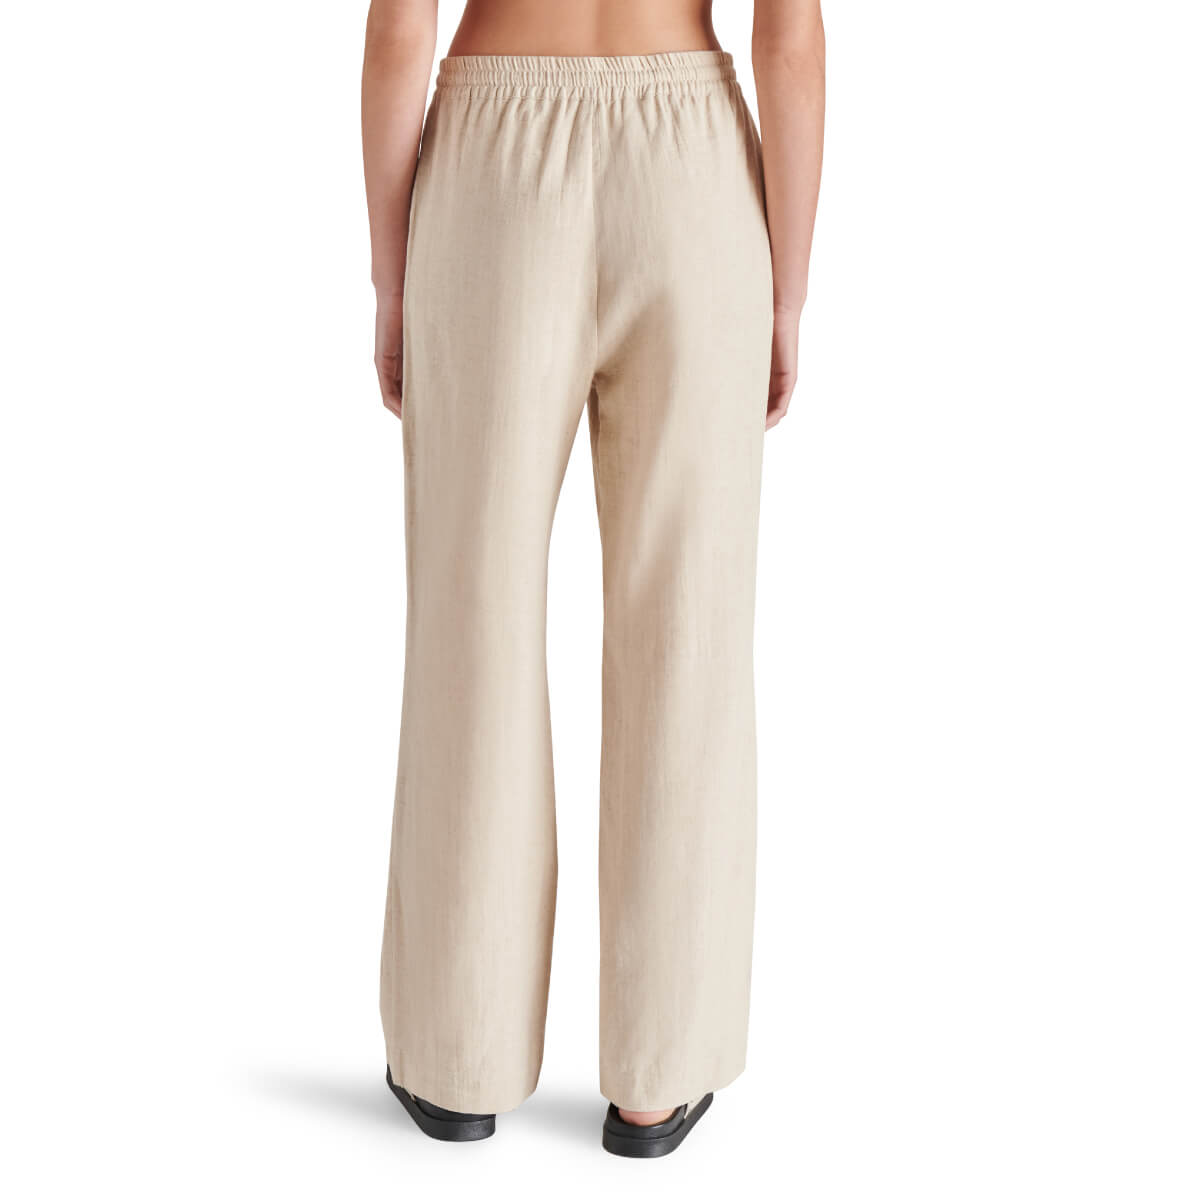 Steve Madden Venetia Drawstring Pants natural back | MILK MONEY milkmoney.co | cute pants for women. cute trendy pants.